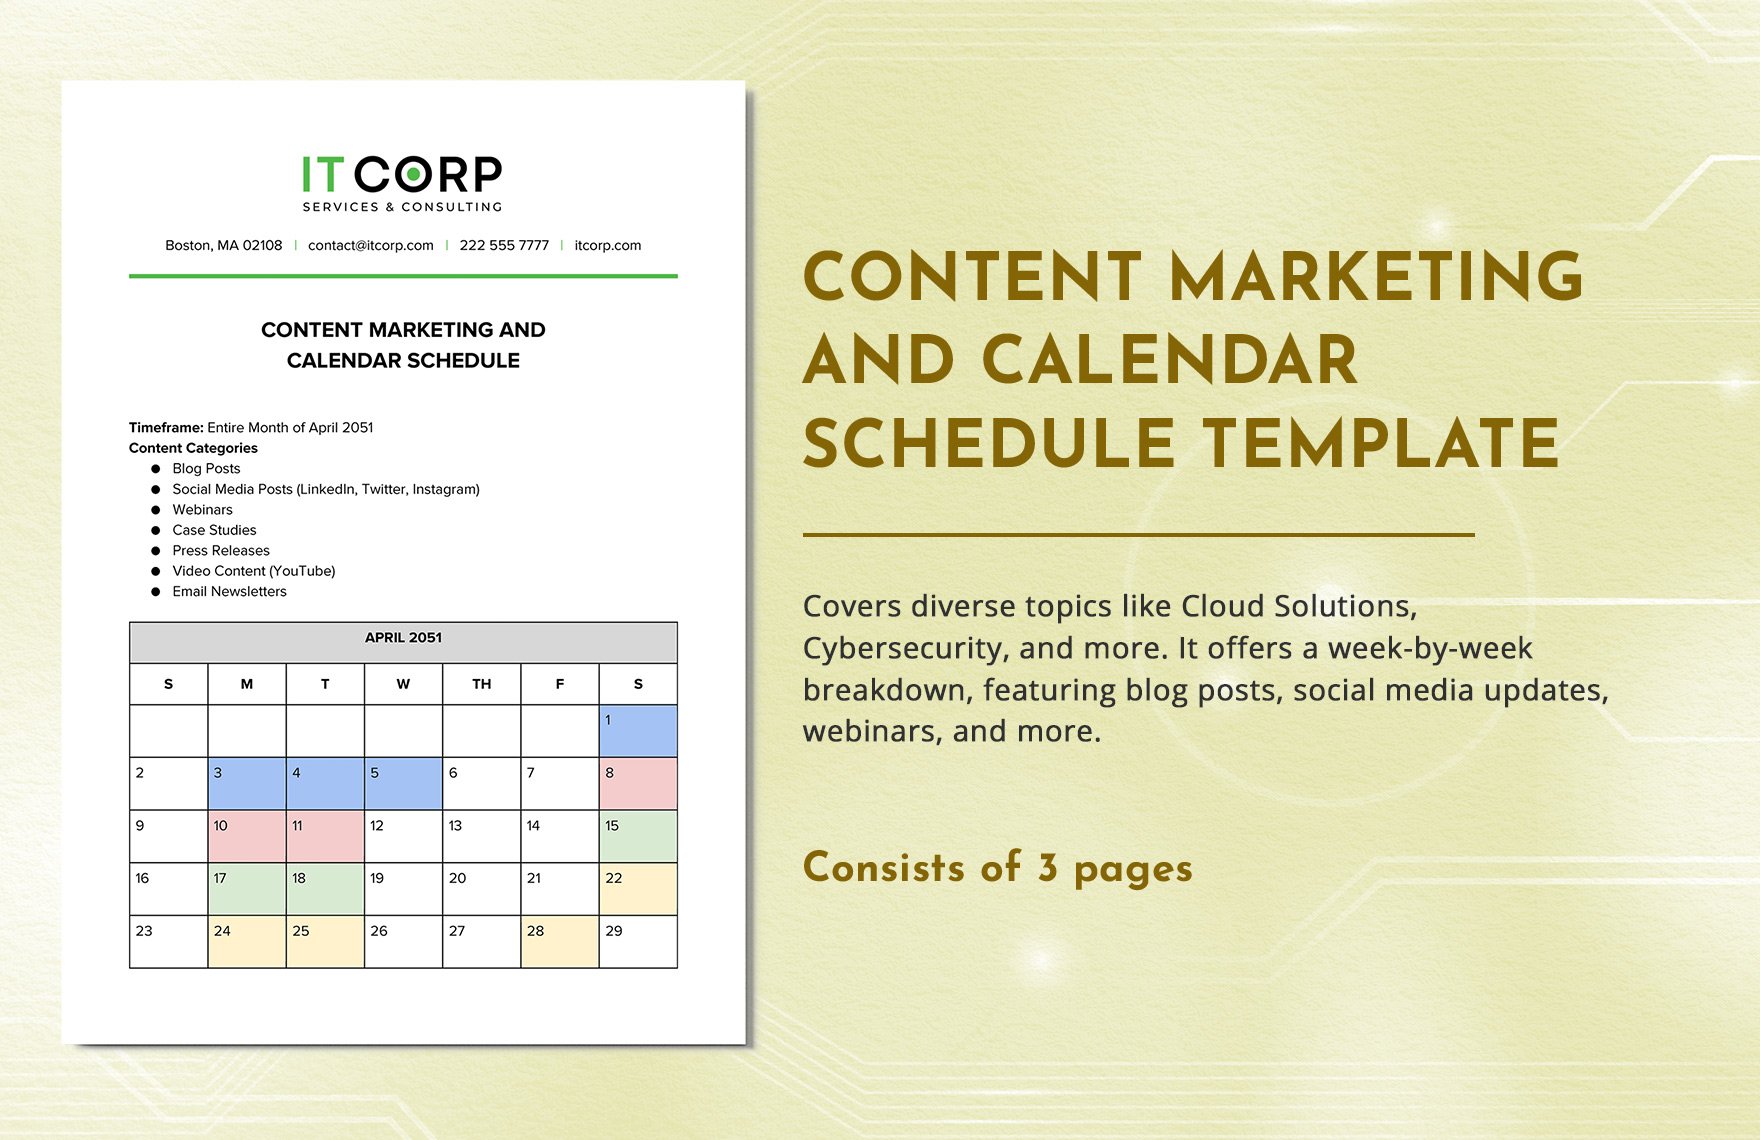 Content Marketing and Calendar Schedule Template